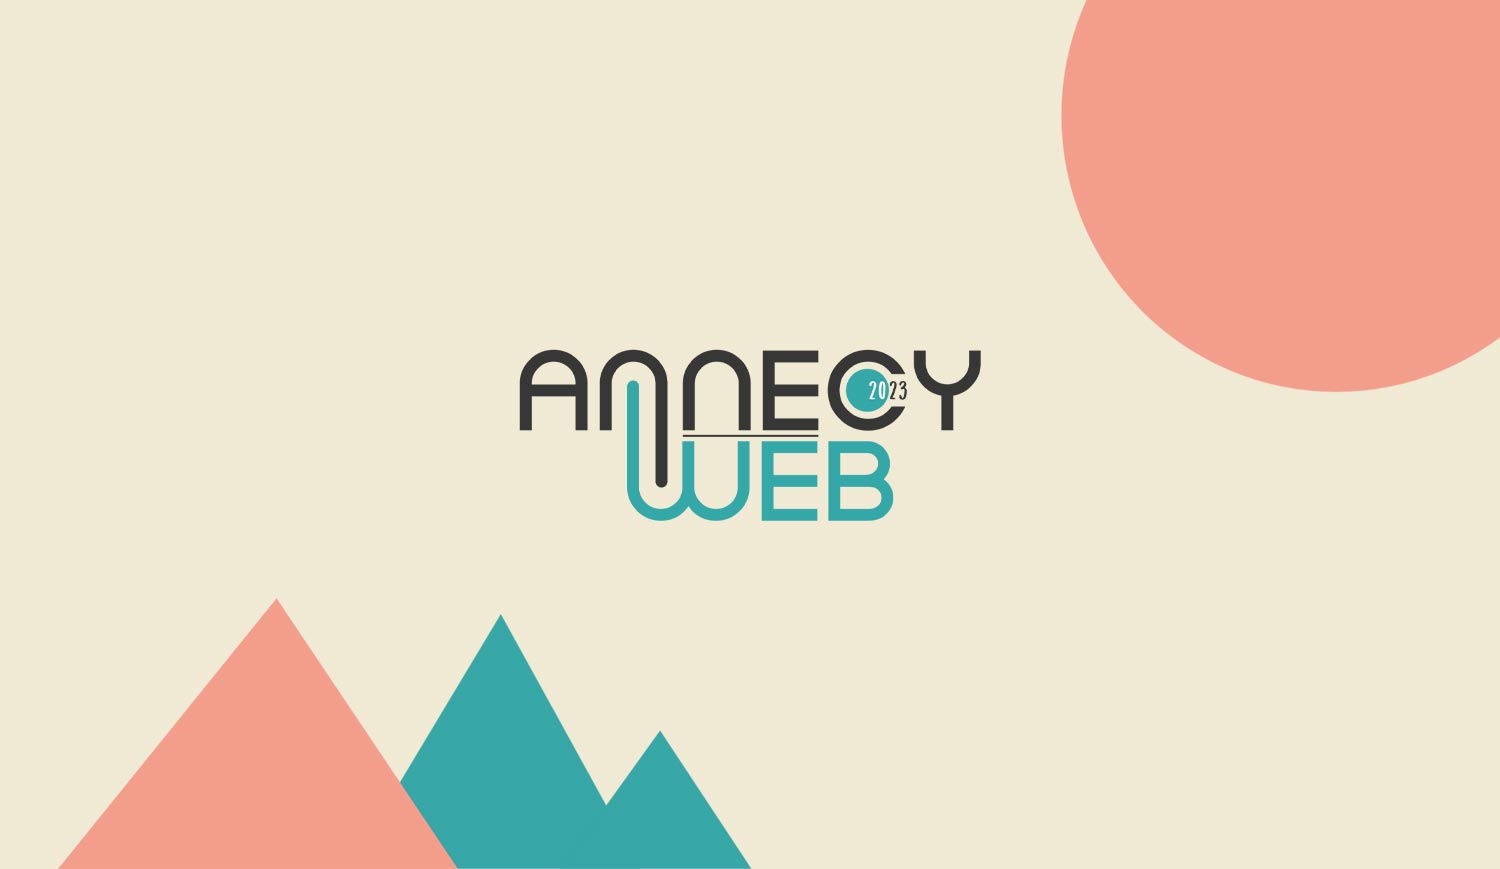 annecy web 2023